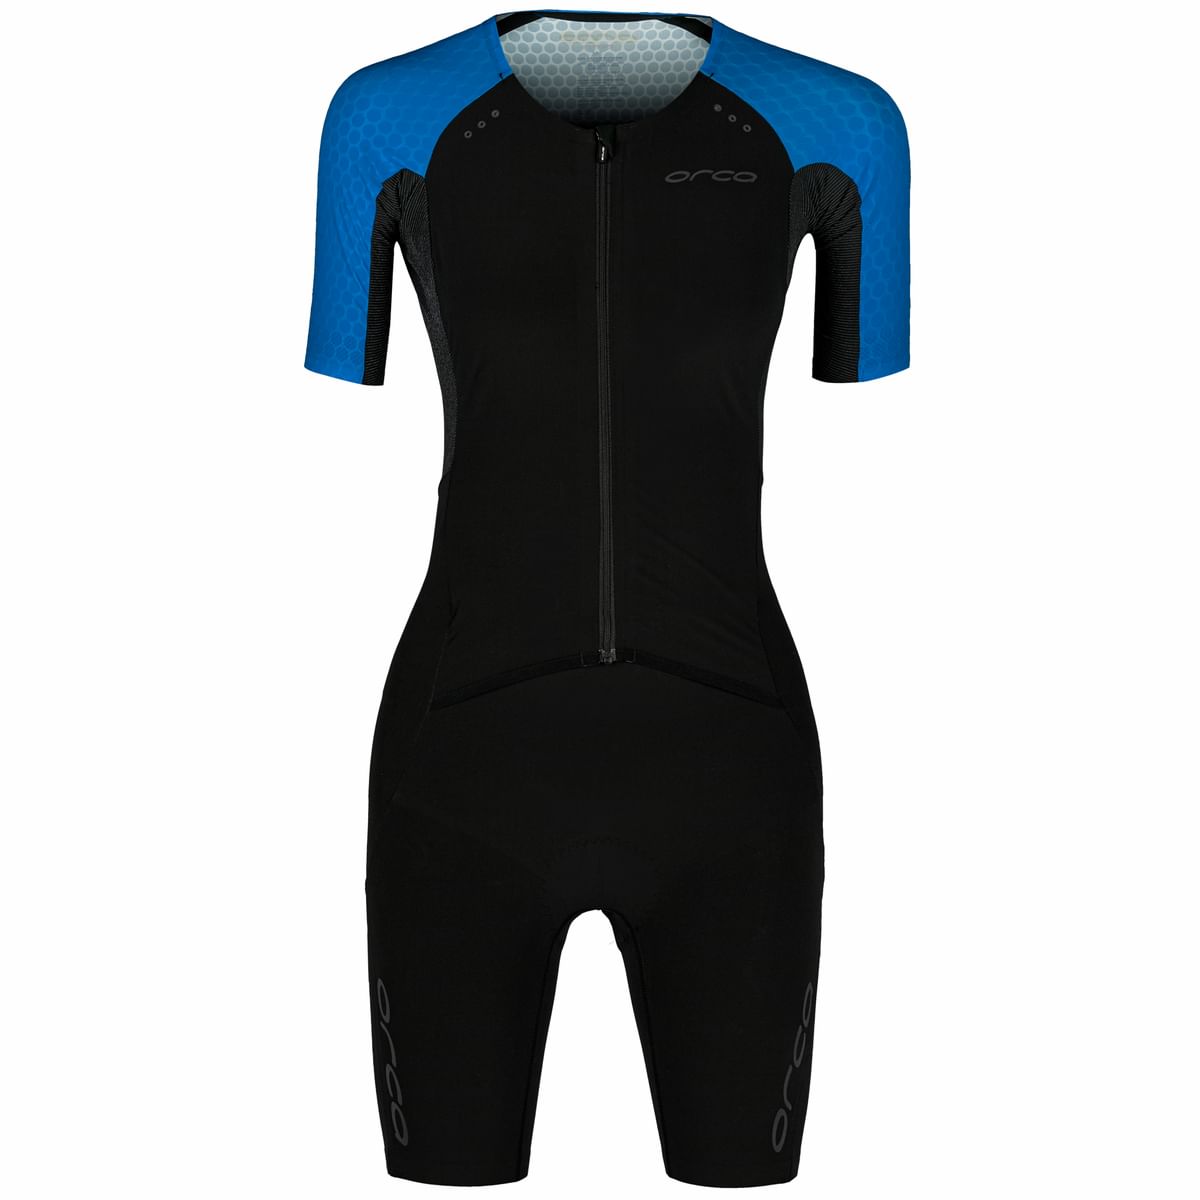 Orca Apex Dream Kona trisuit zwart/blauw dames  NR51.67